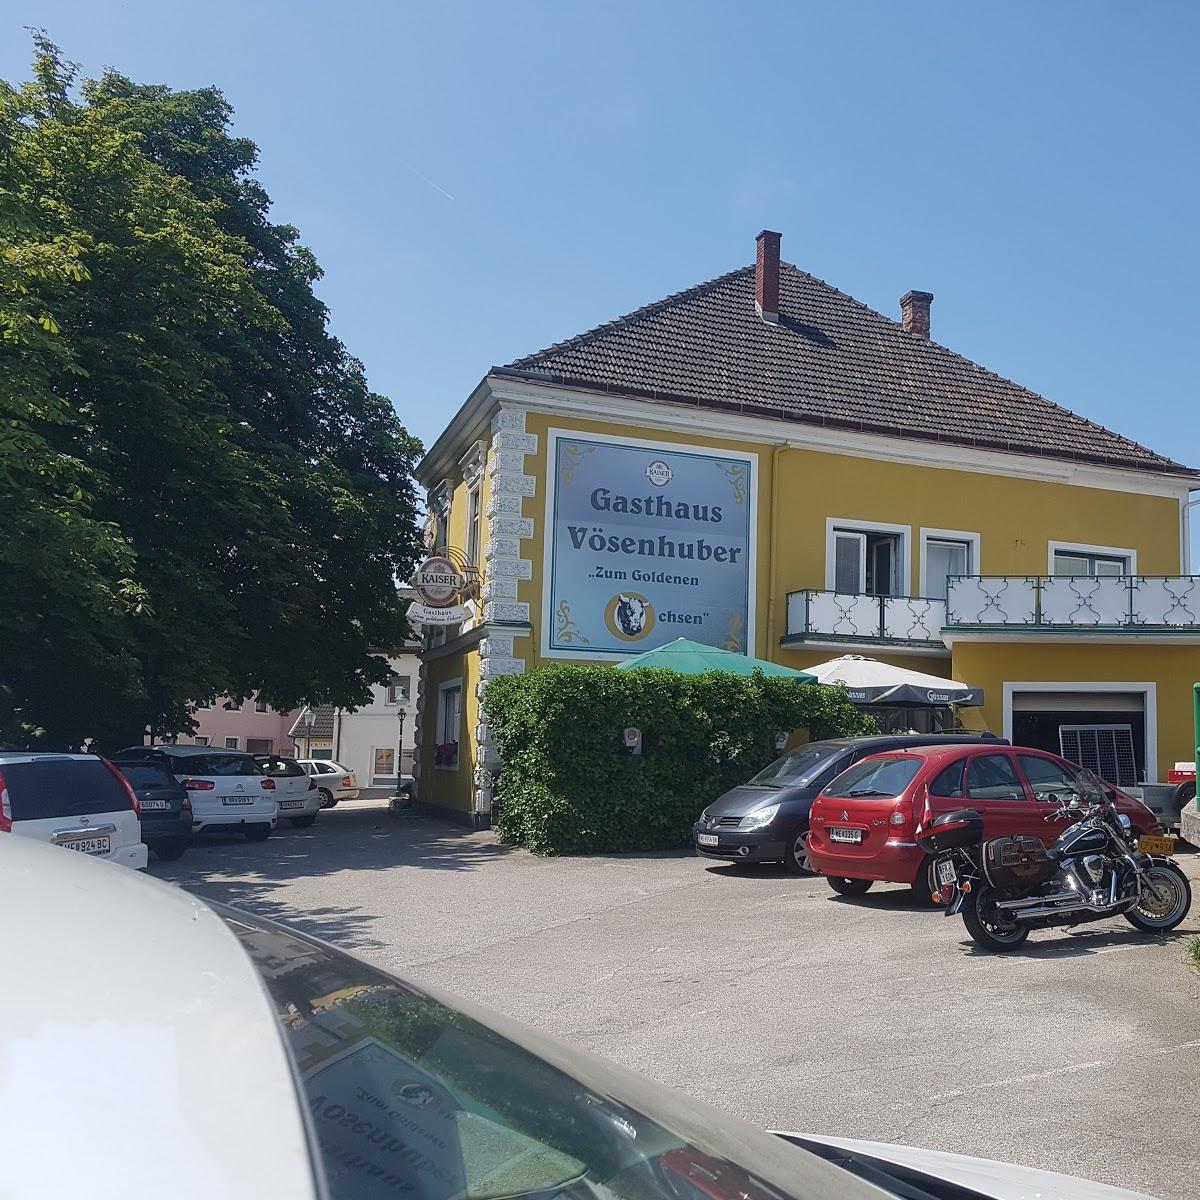 Restaurant "Gasthaus Vösenhuber Zum goldenen Ochsen" in Persenbeug